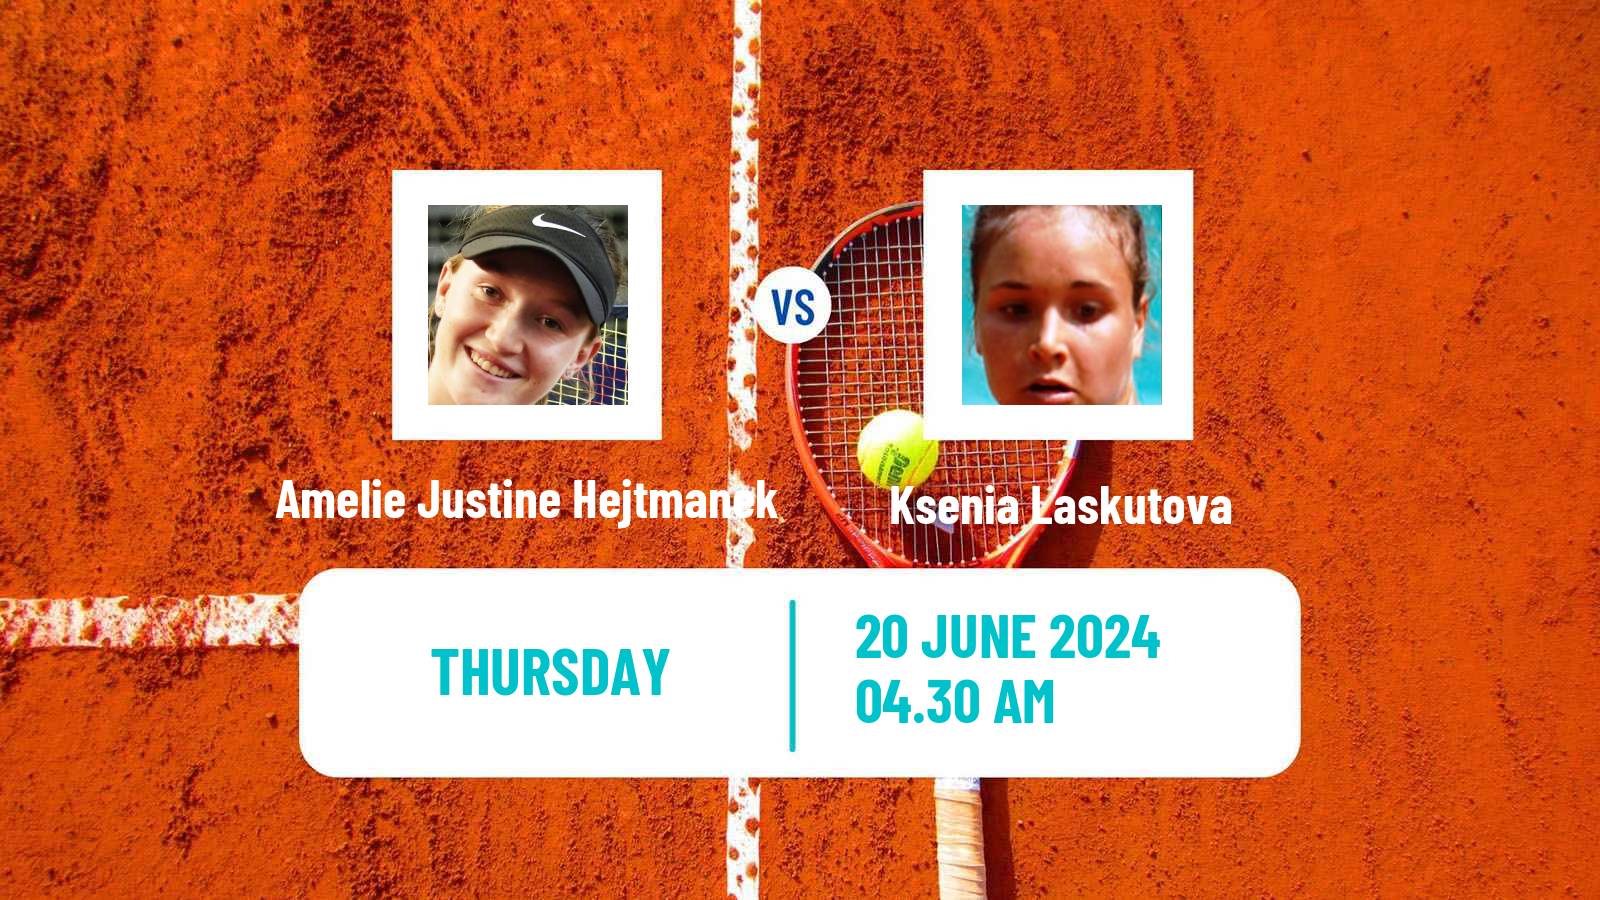 Tennis ITF W15 Kursumlijska Banja 8 Women Amelie Justine Hejtmanek - Ksenia Laskutova